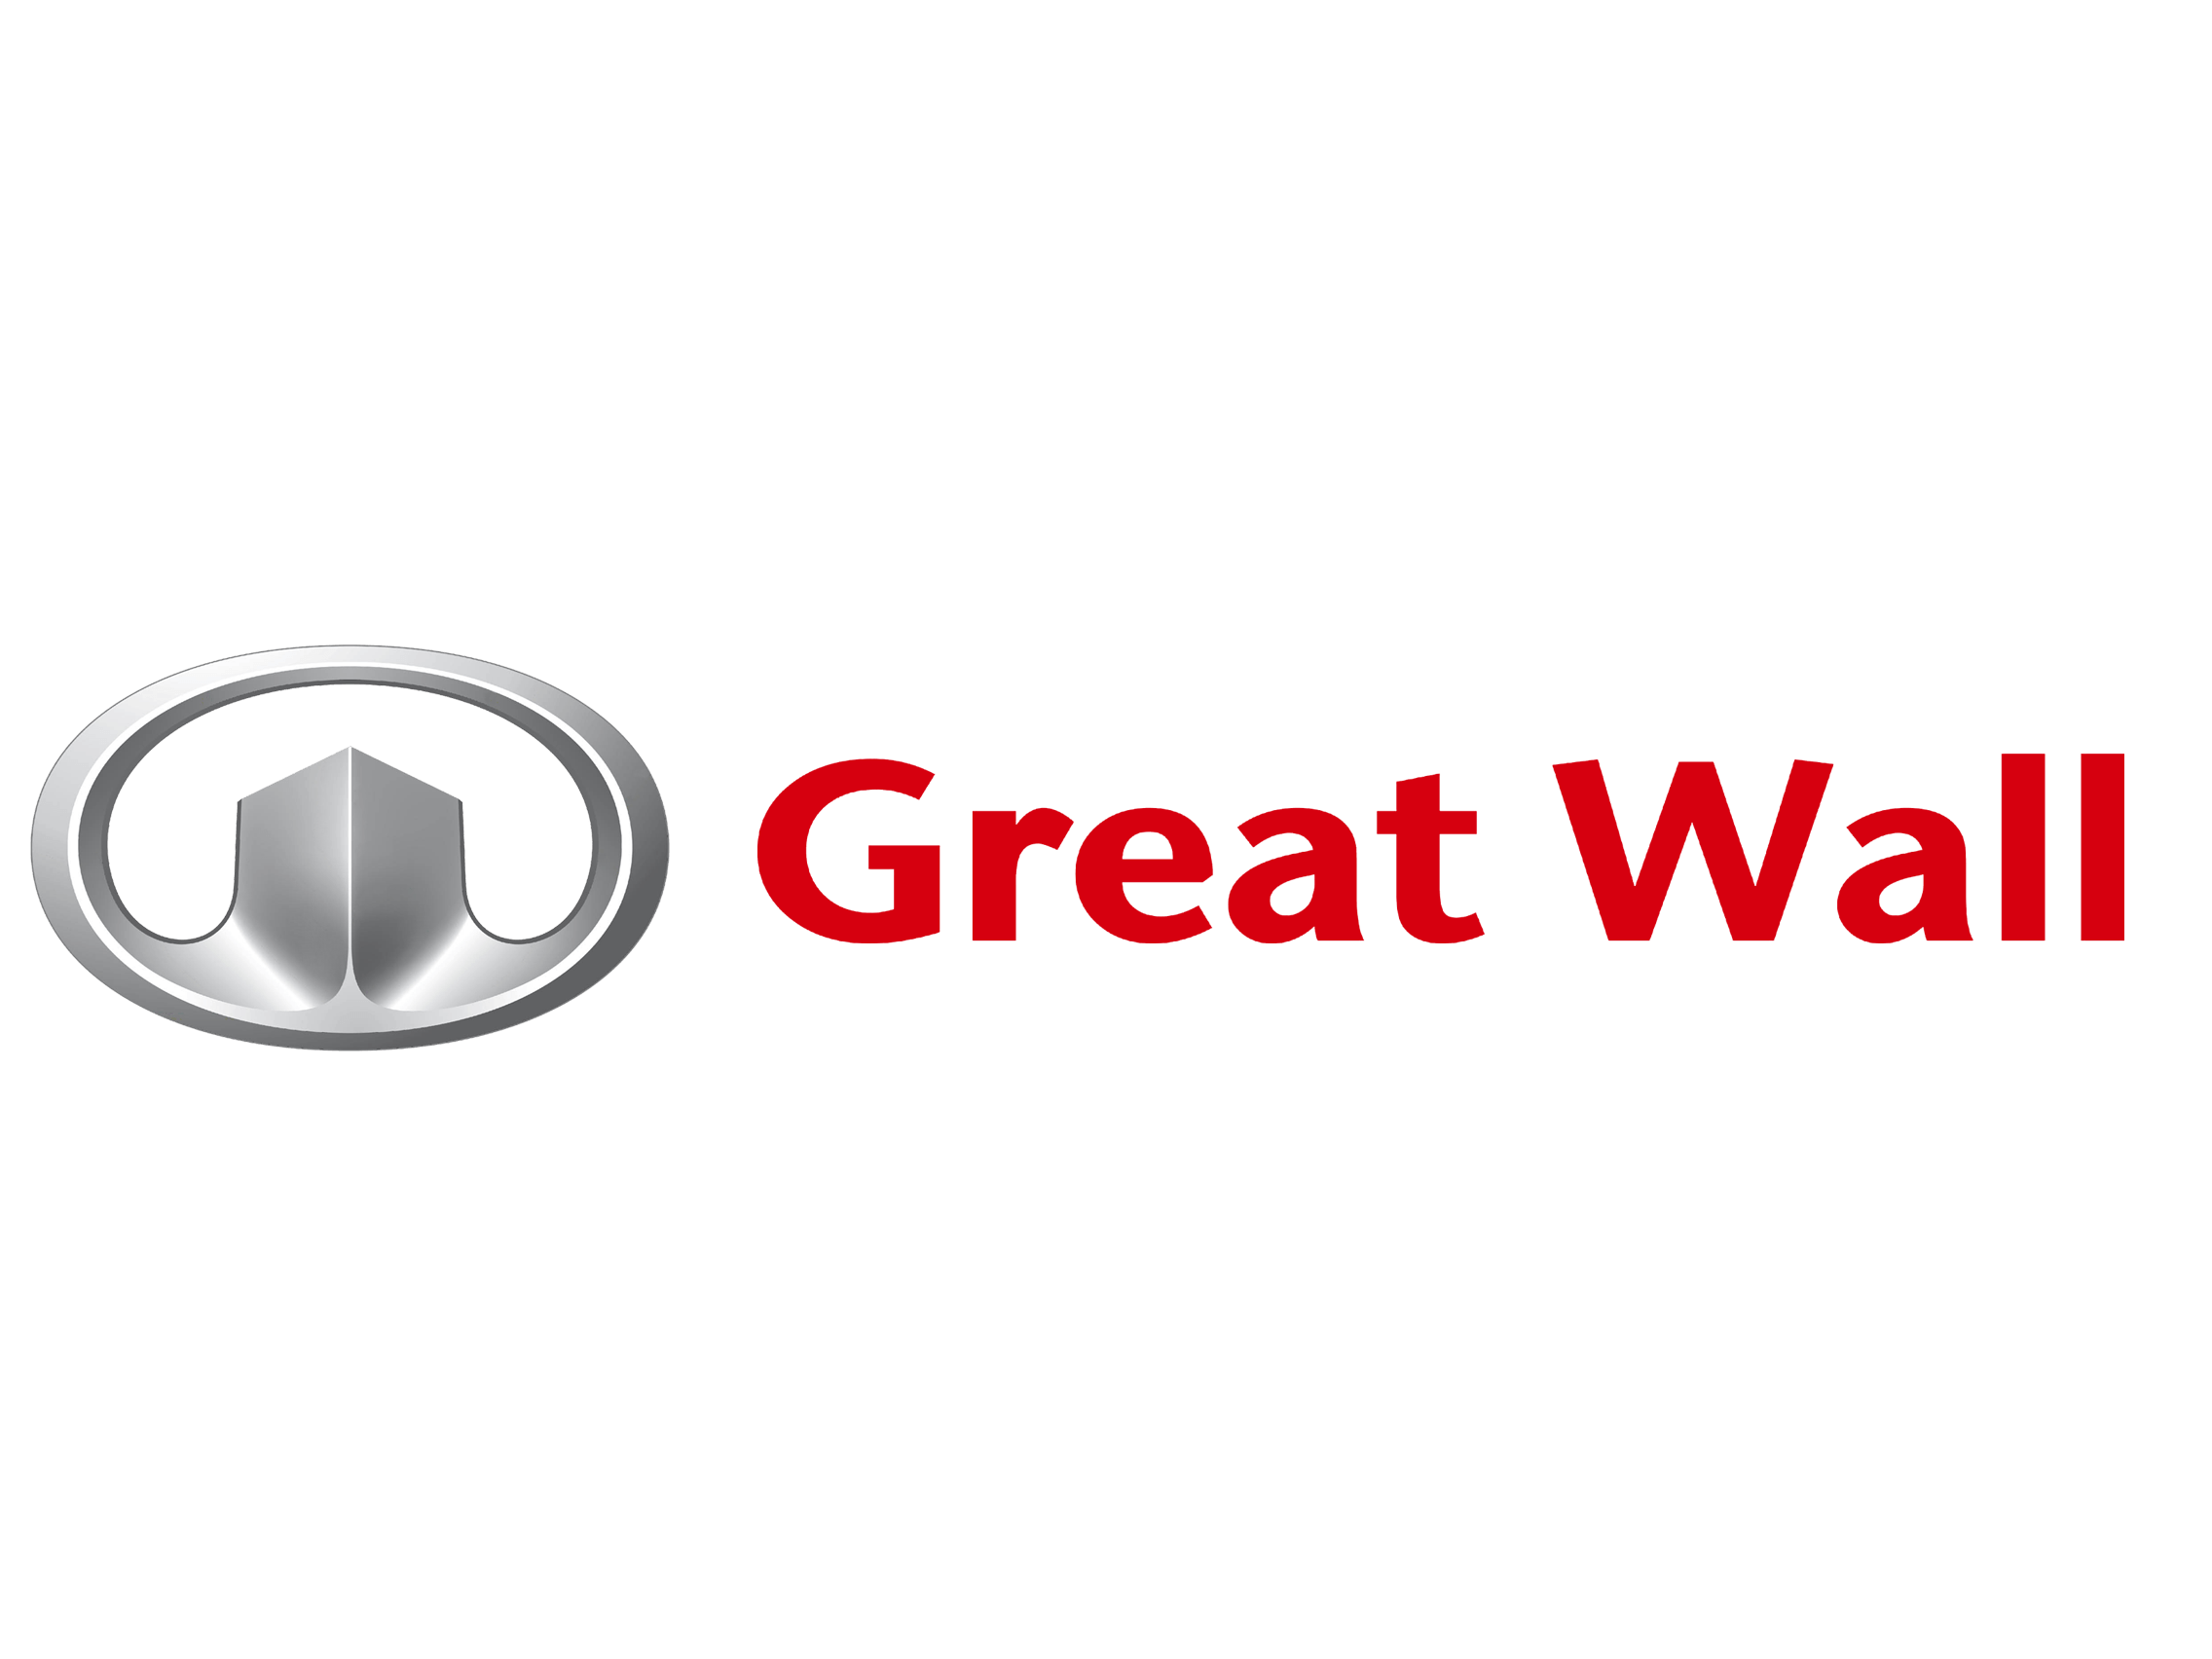 The Great WA Logo - Great Wall logo